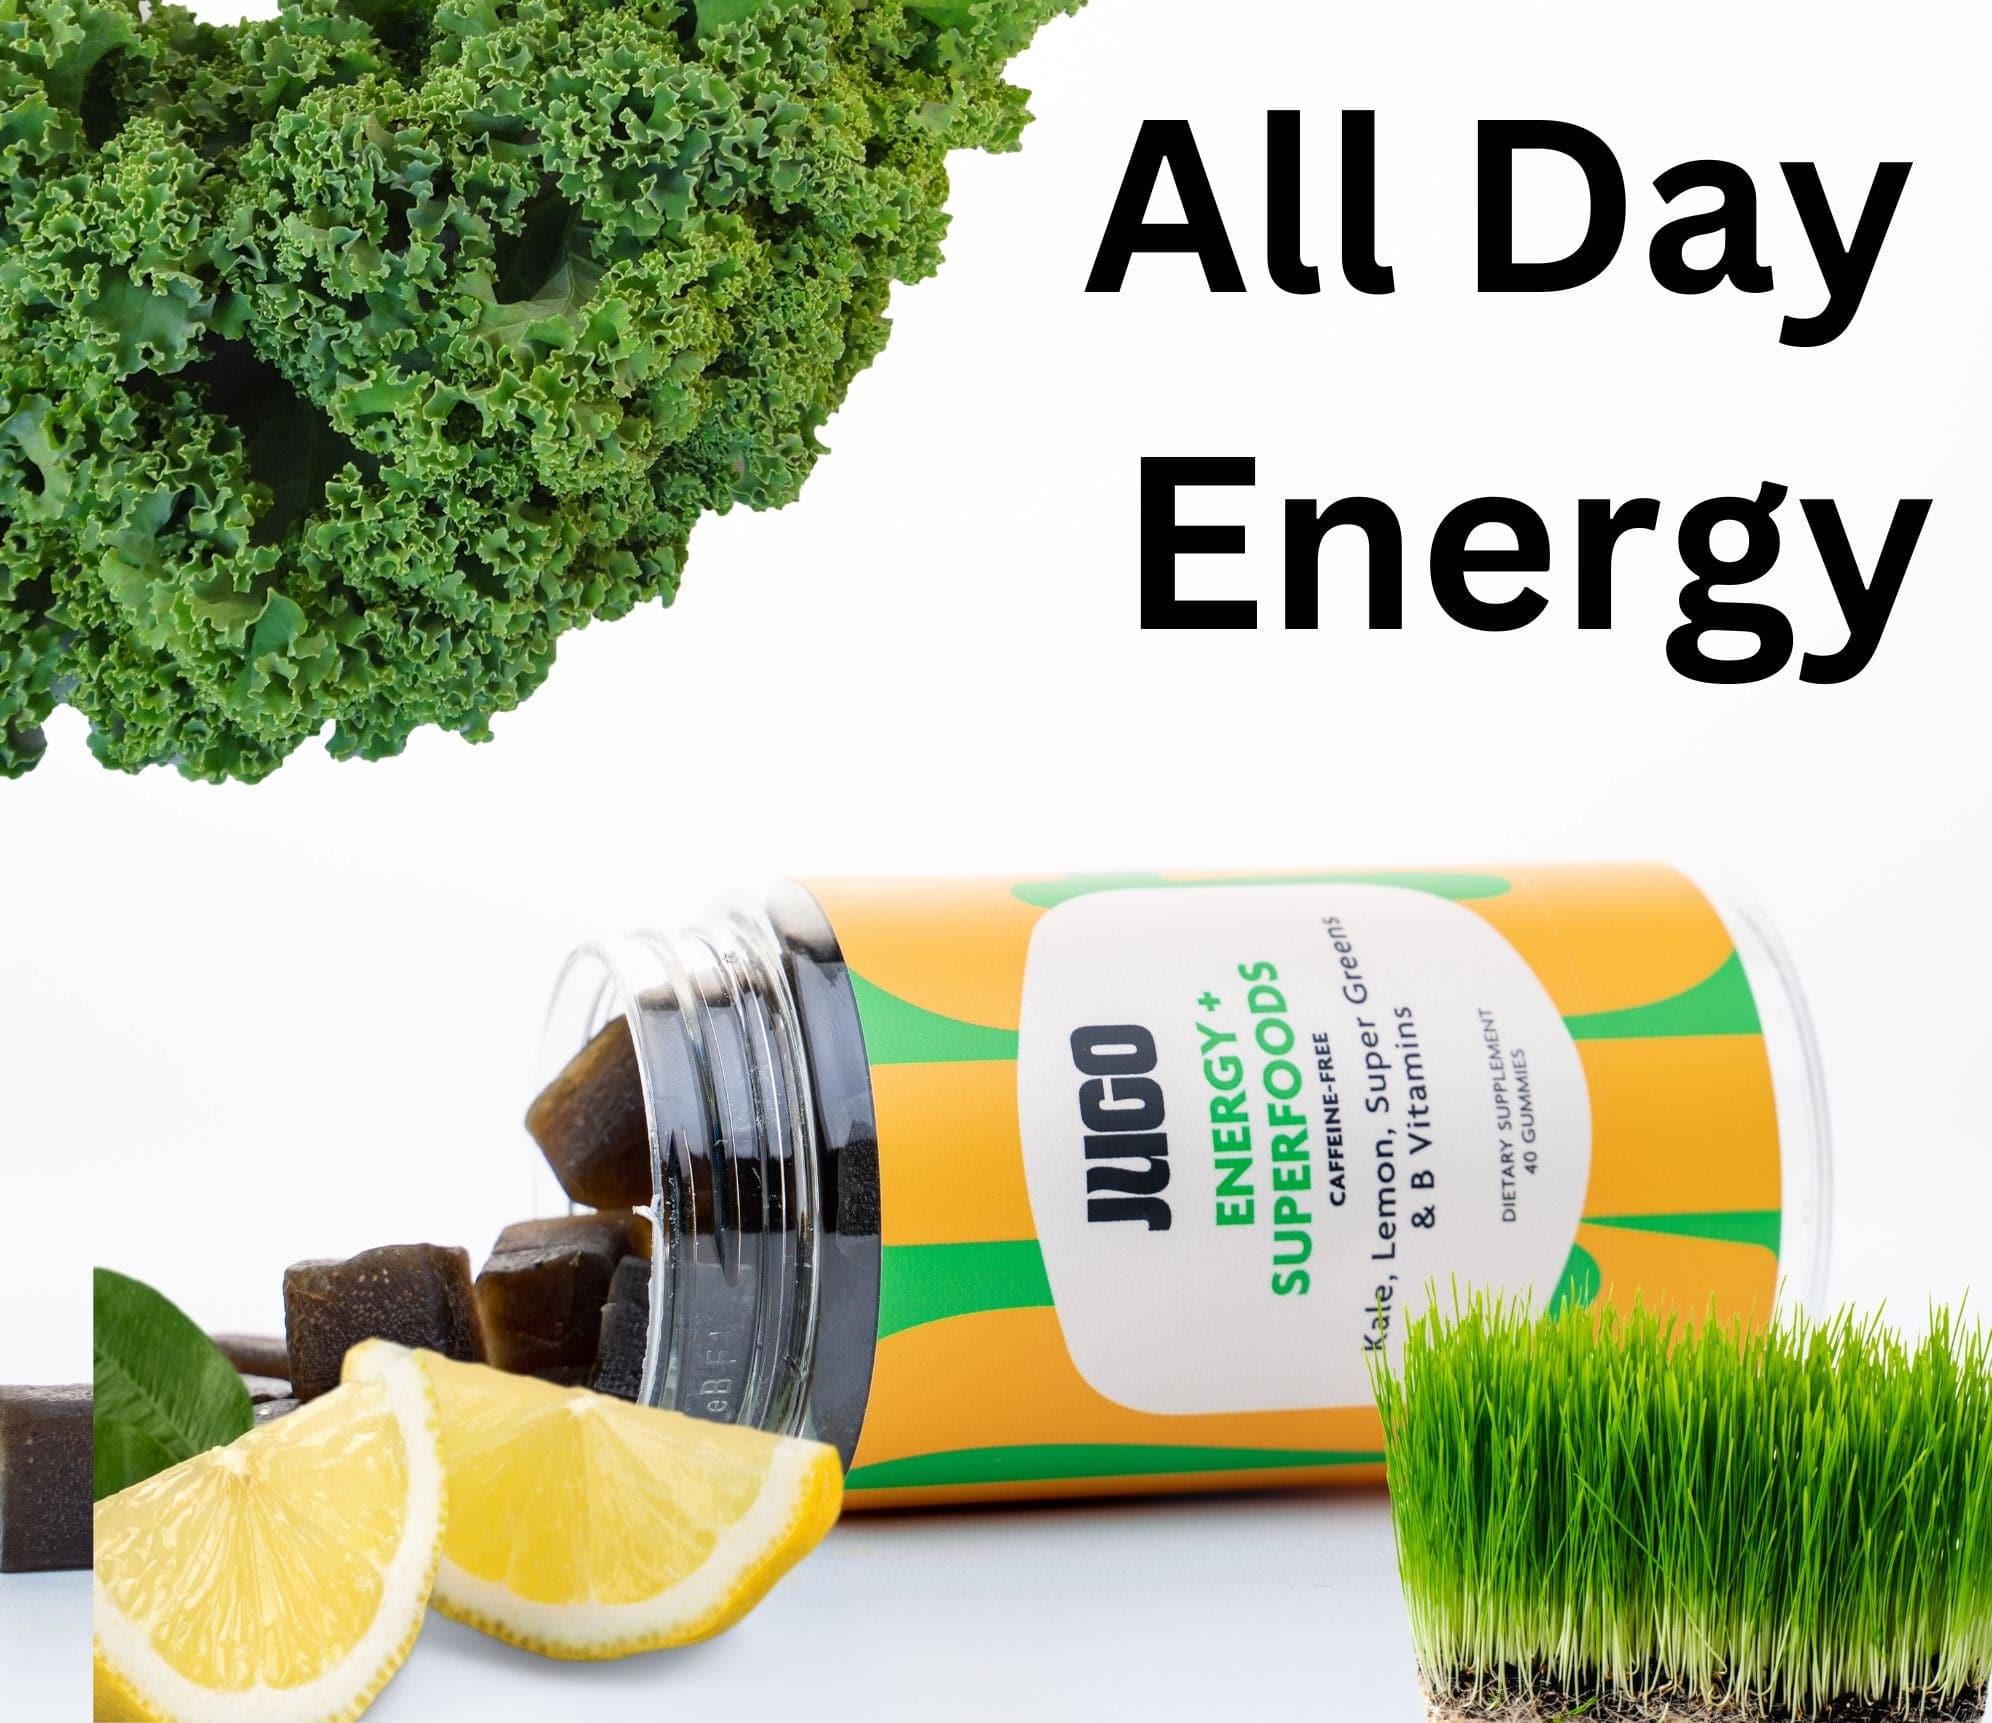 Energy gummy bundle for all-day energy